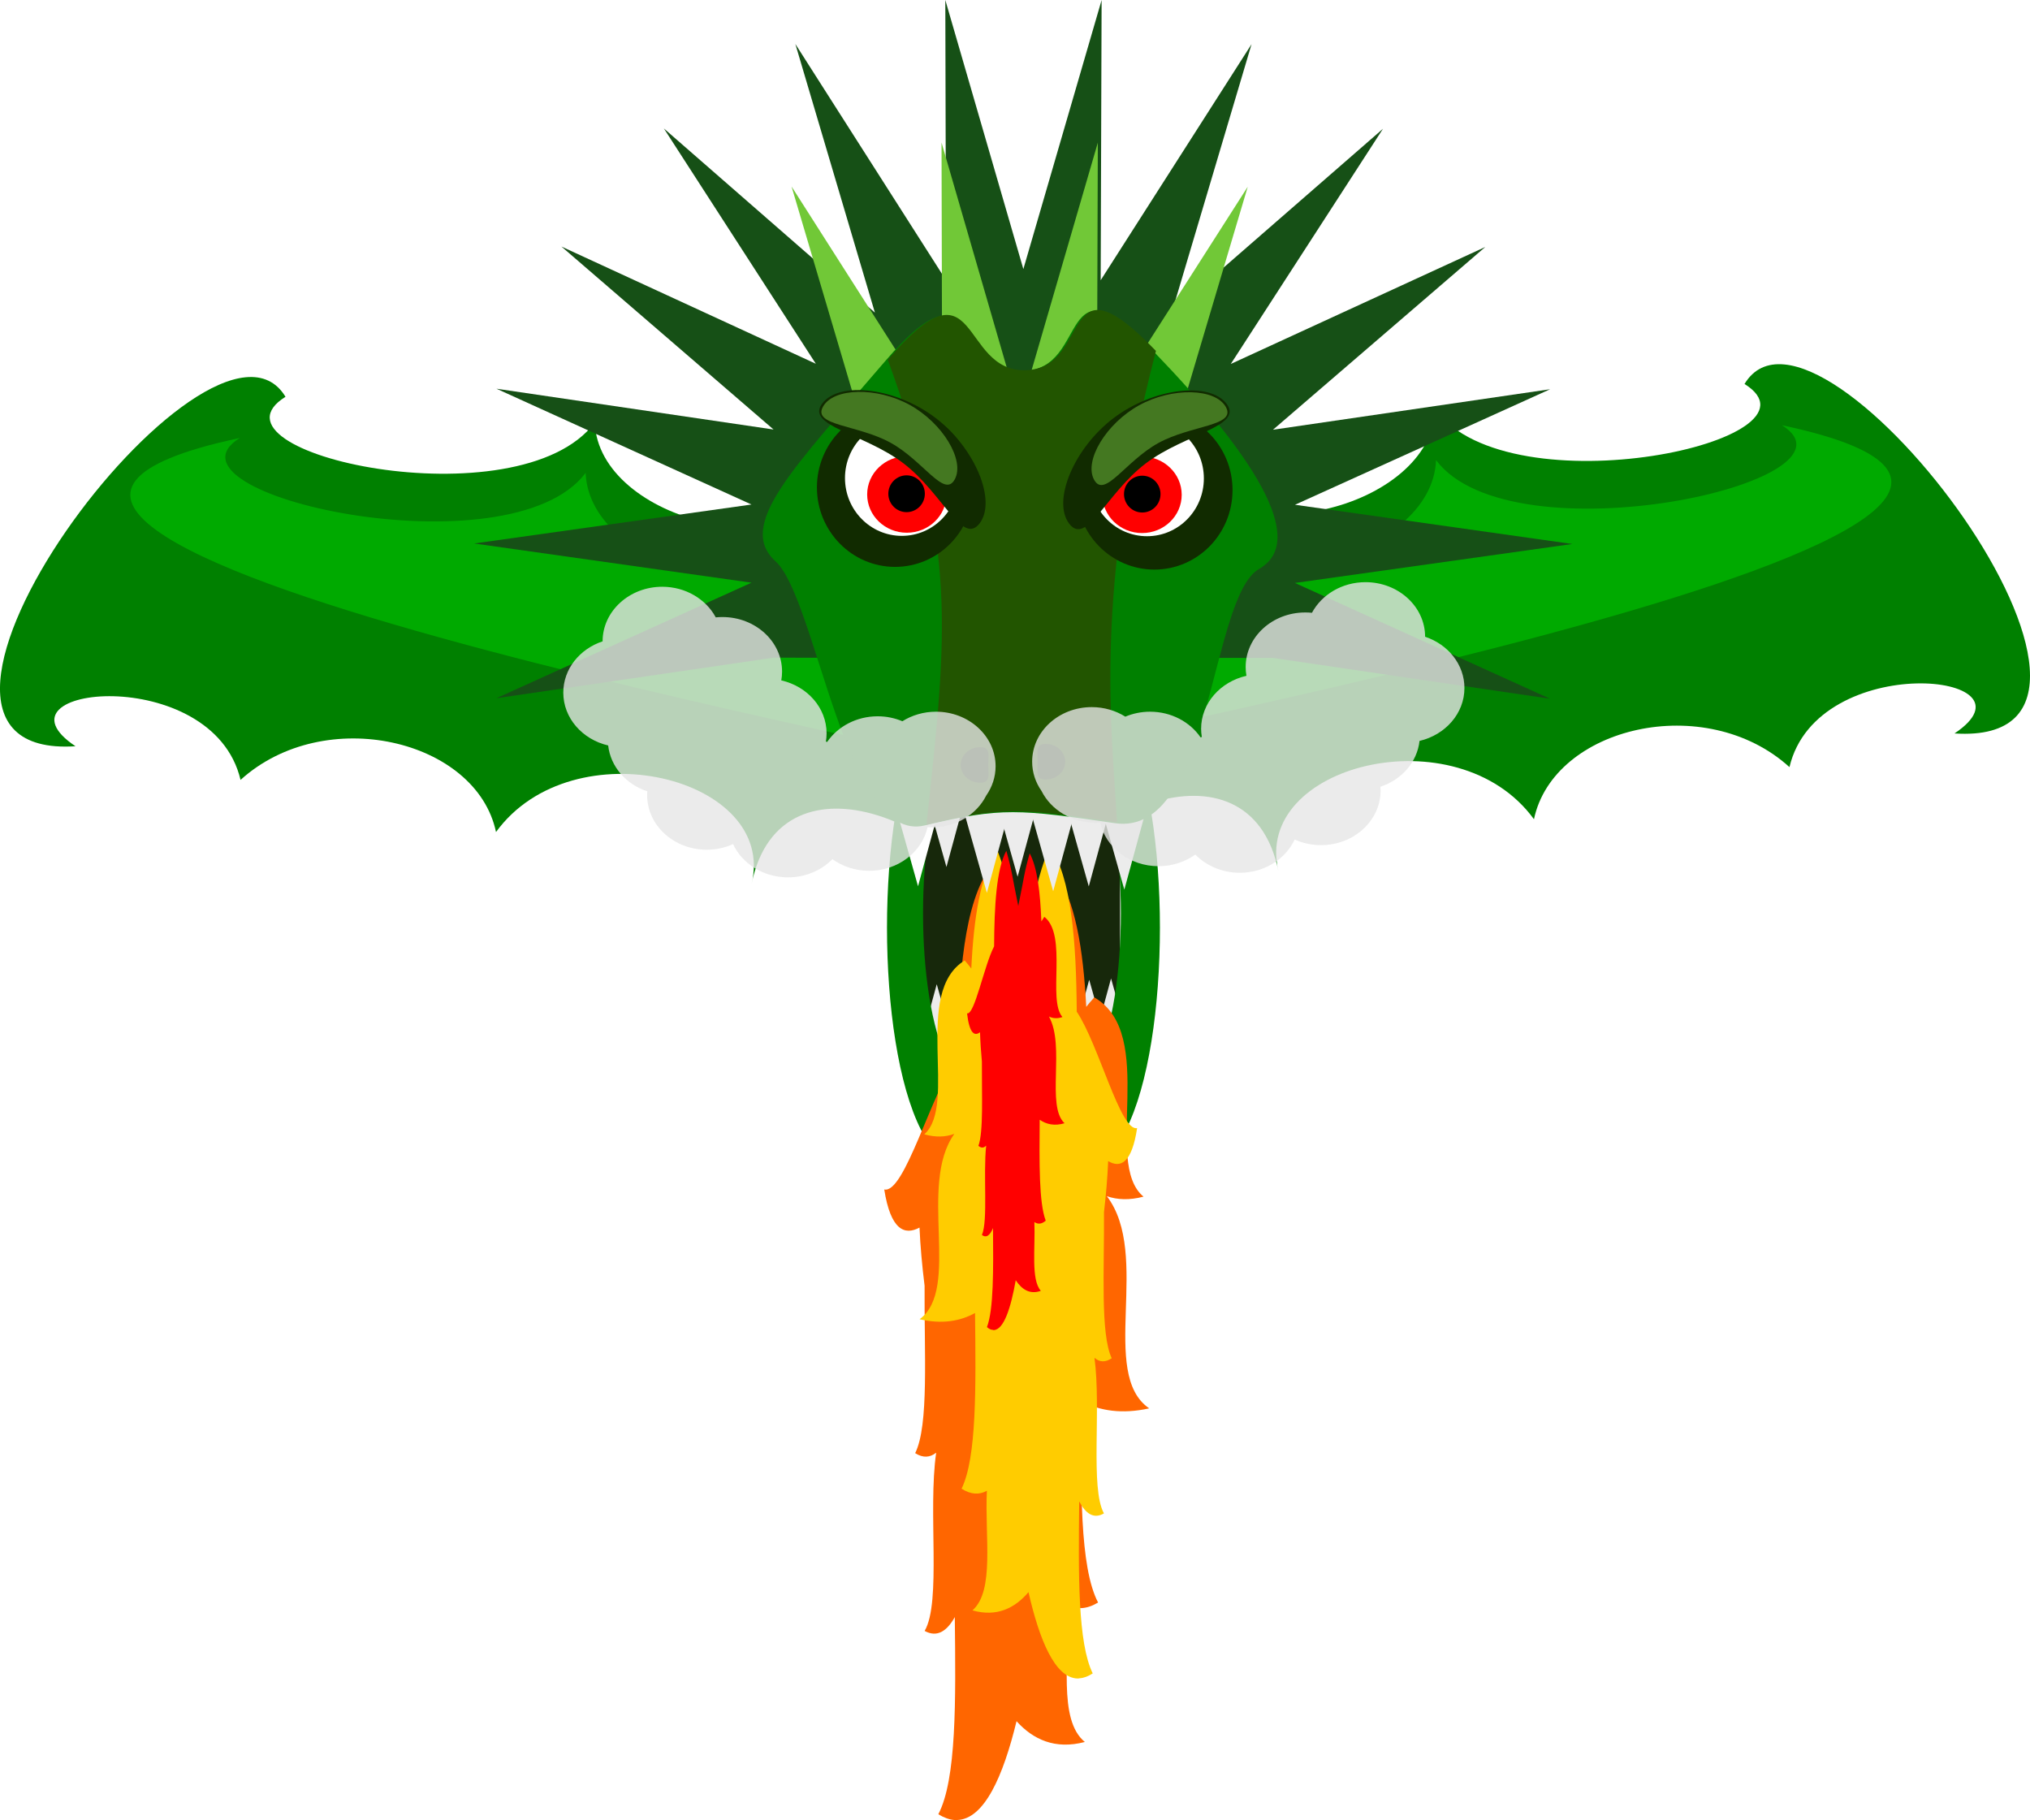 Green Dragon Clipart - BClipart